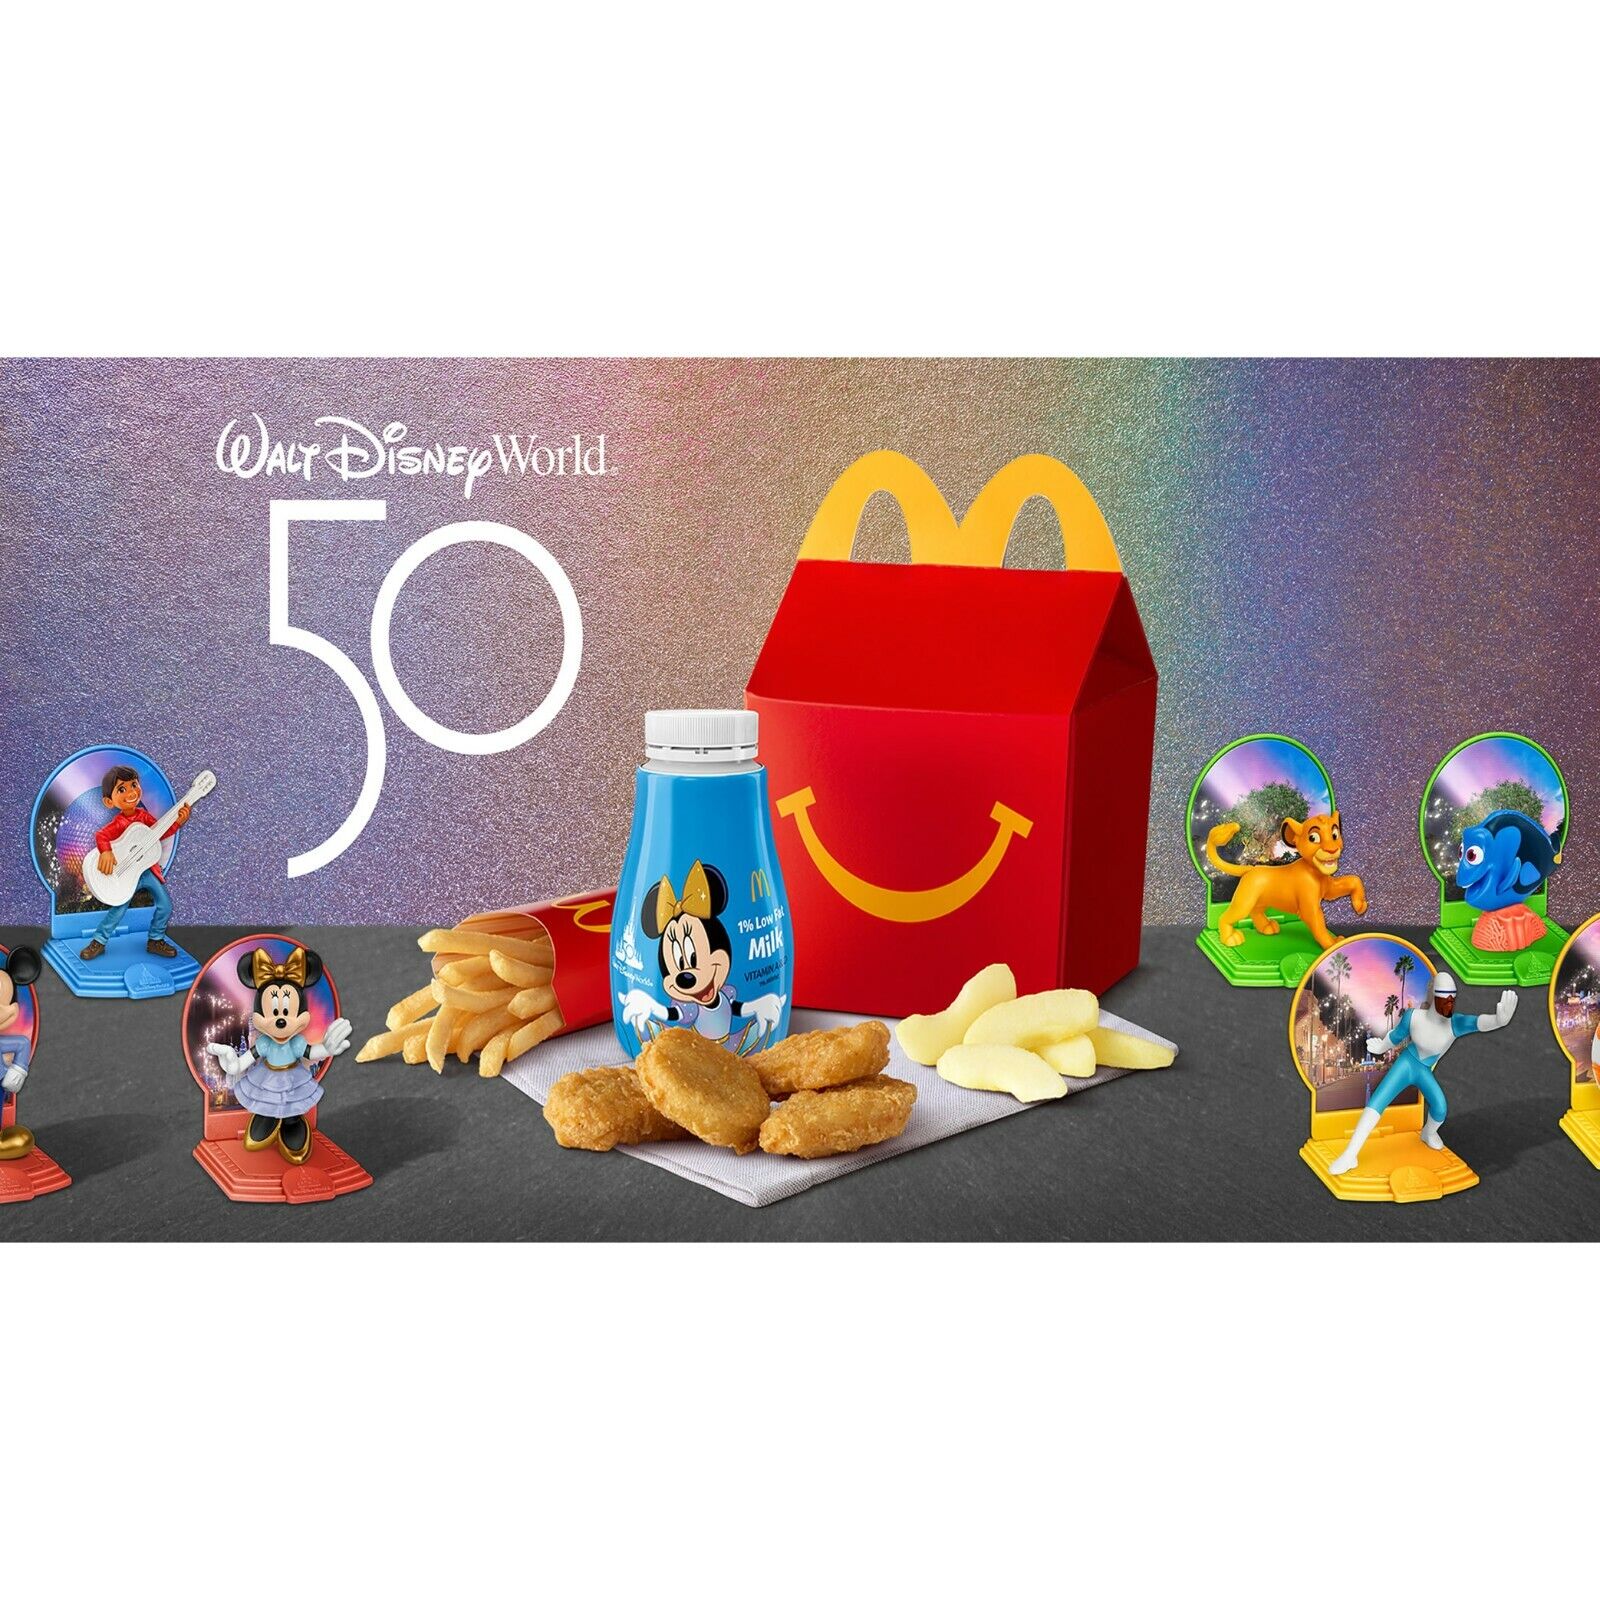 2021 McDonald's Walt Disney World 50th Anniversary Indv. or Set Drop Down Menu